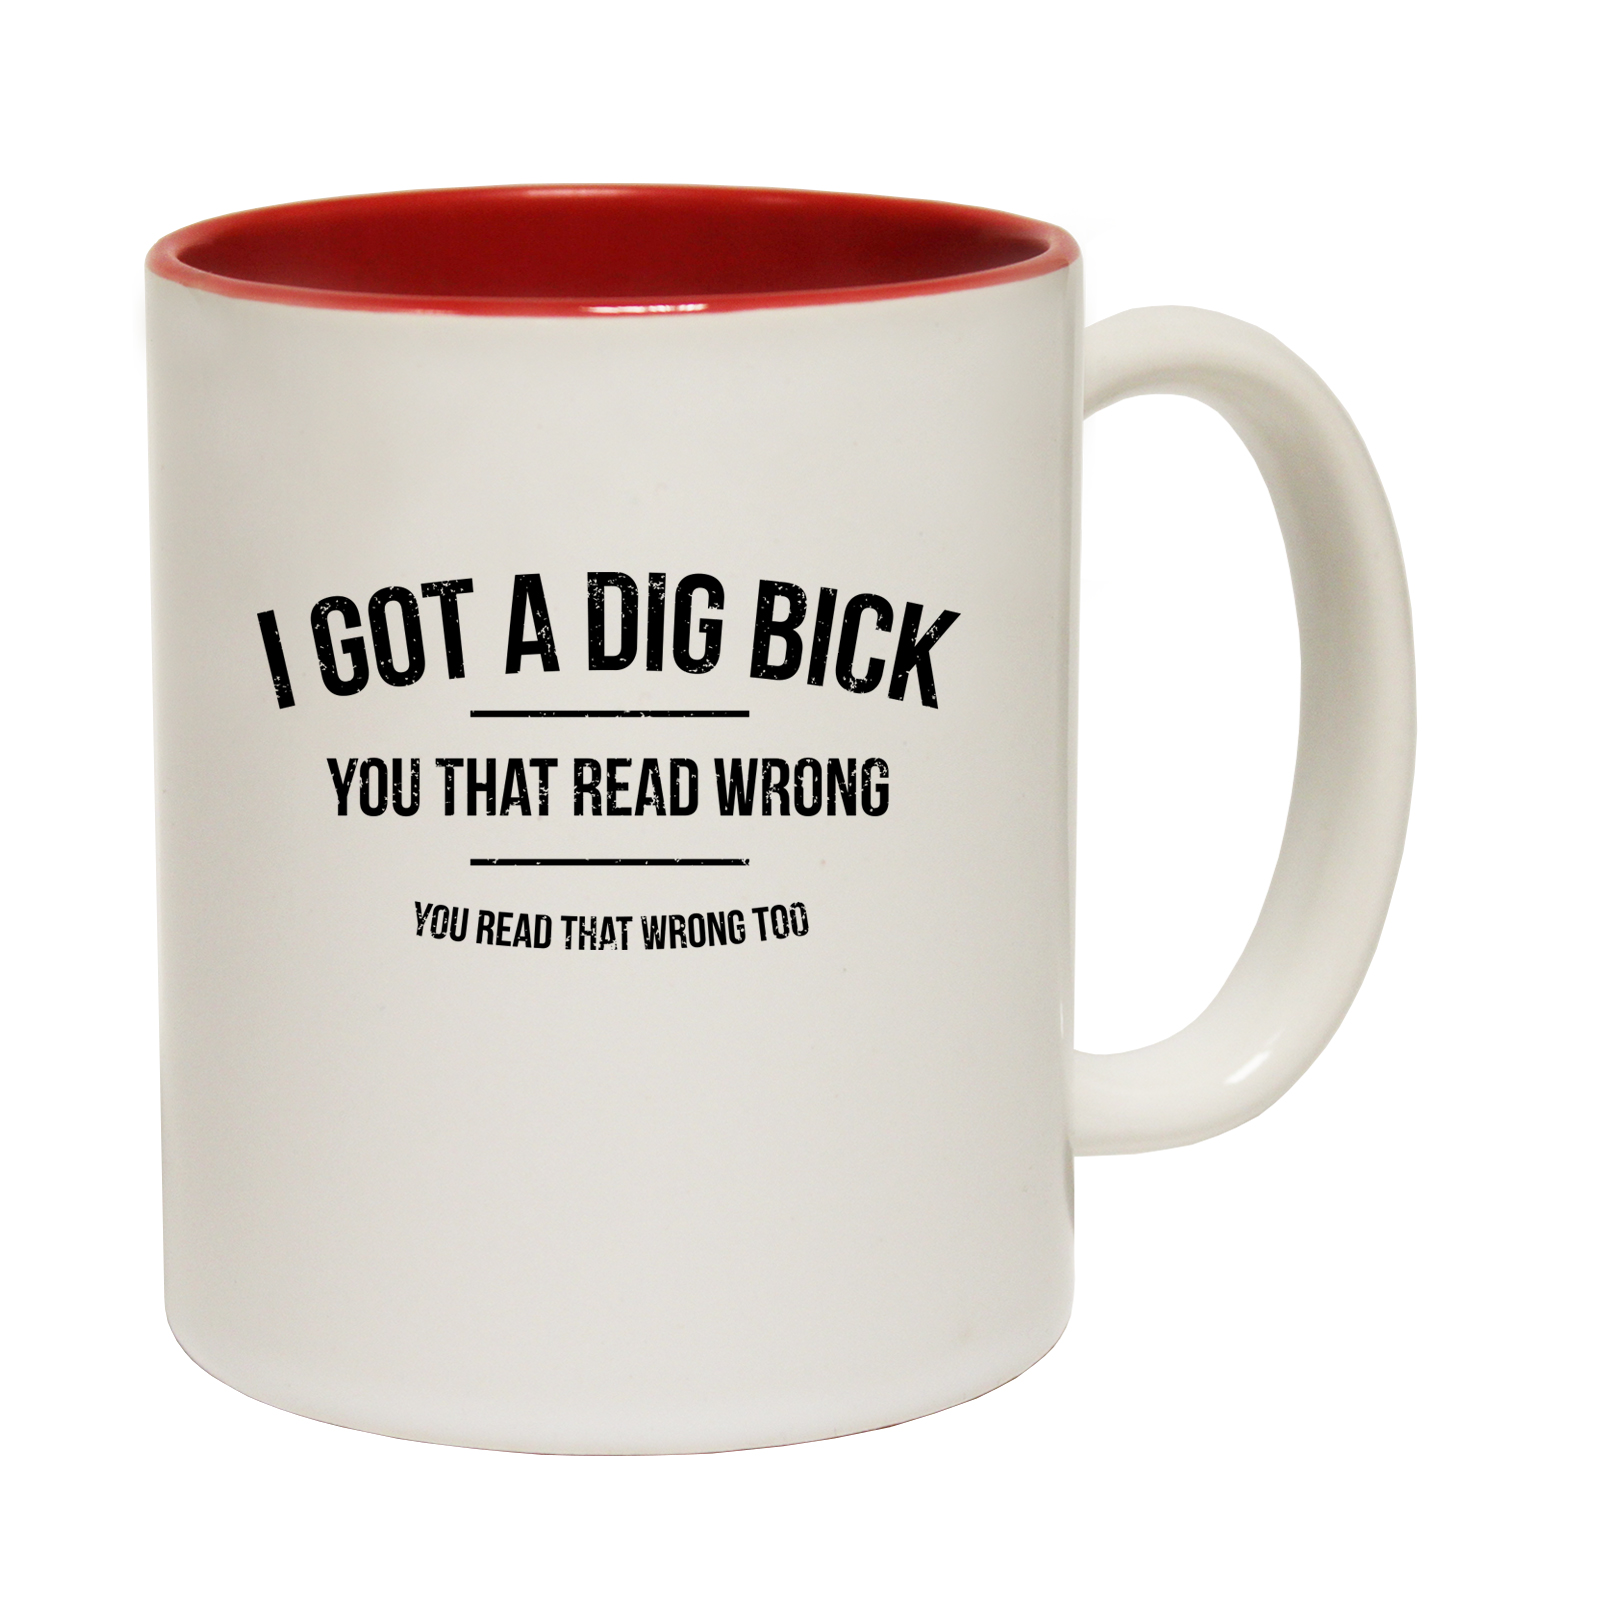 Funny Mugs I Got A Dig Bick Offensive Adult Humour Rude Cheeky Novelty Mug Ebay